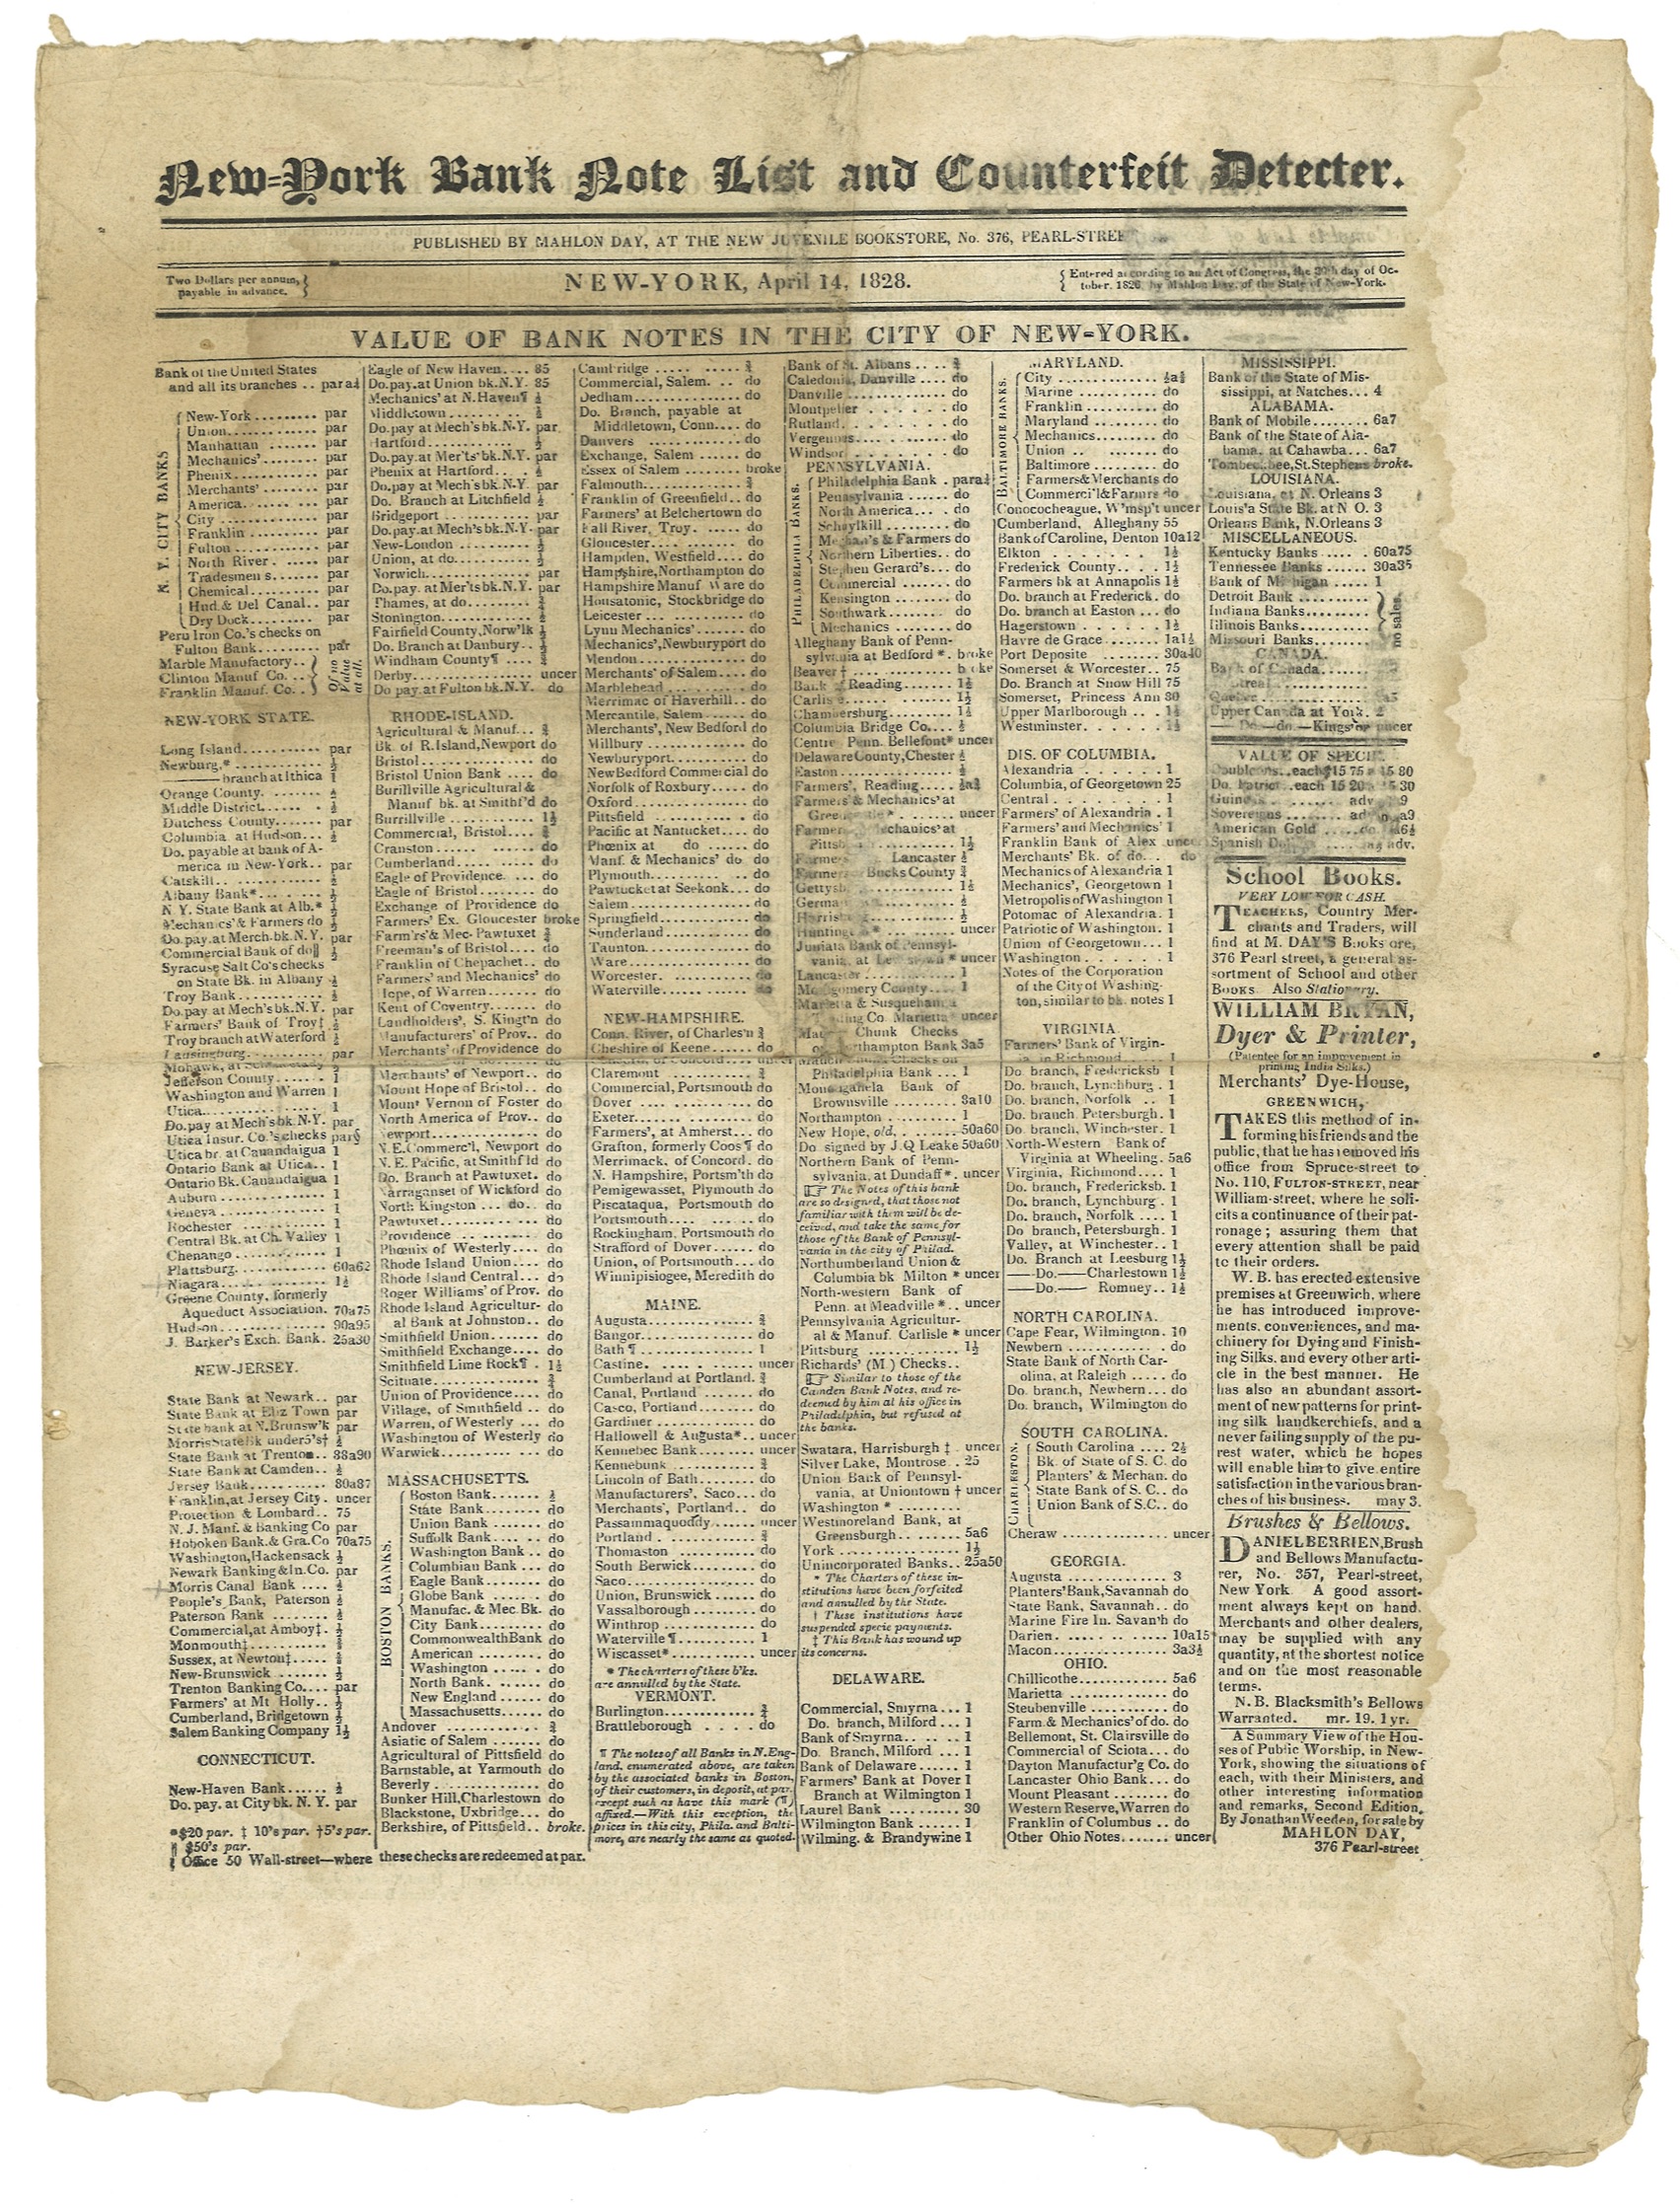 Mahlon Day's Originary Counterfeit Detecter, 1828